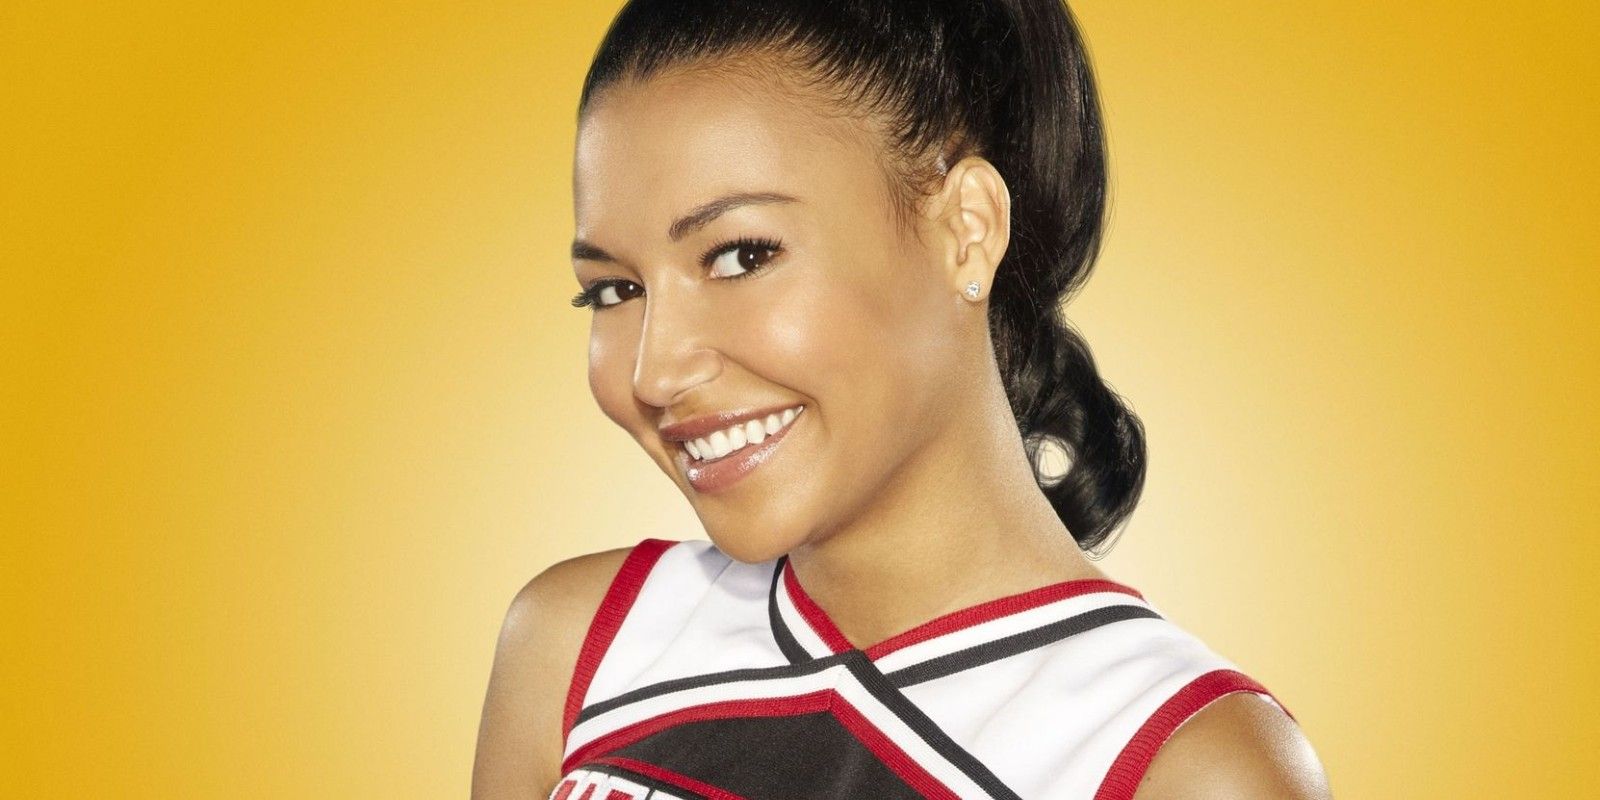 Naya Rivera as Santana in a promo image for Glee